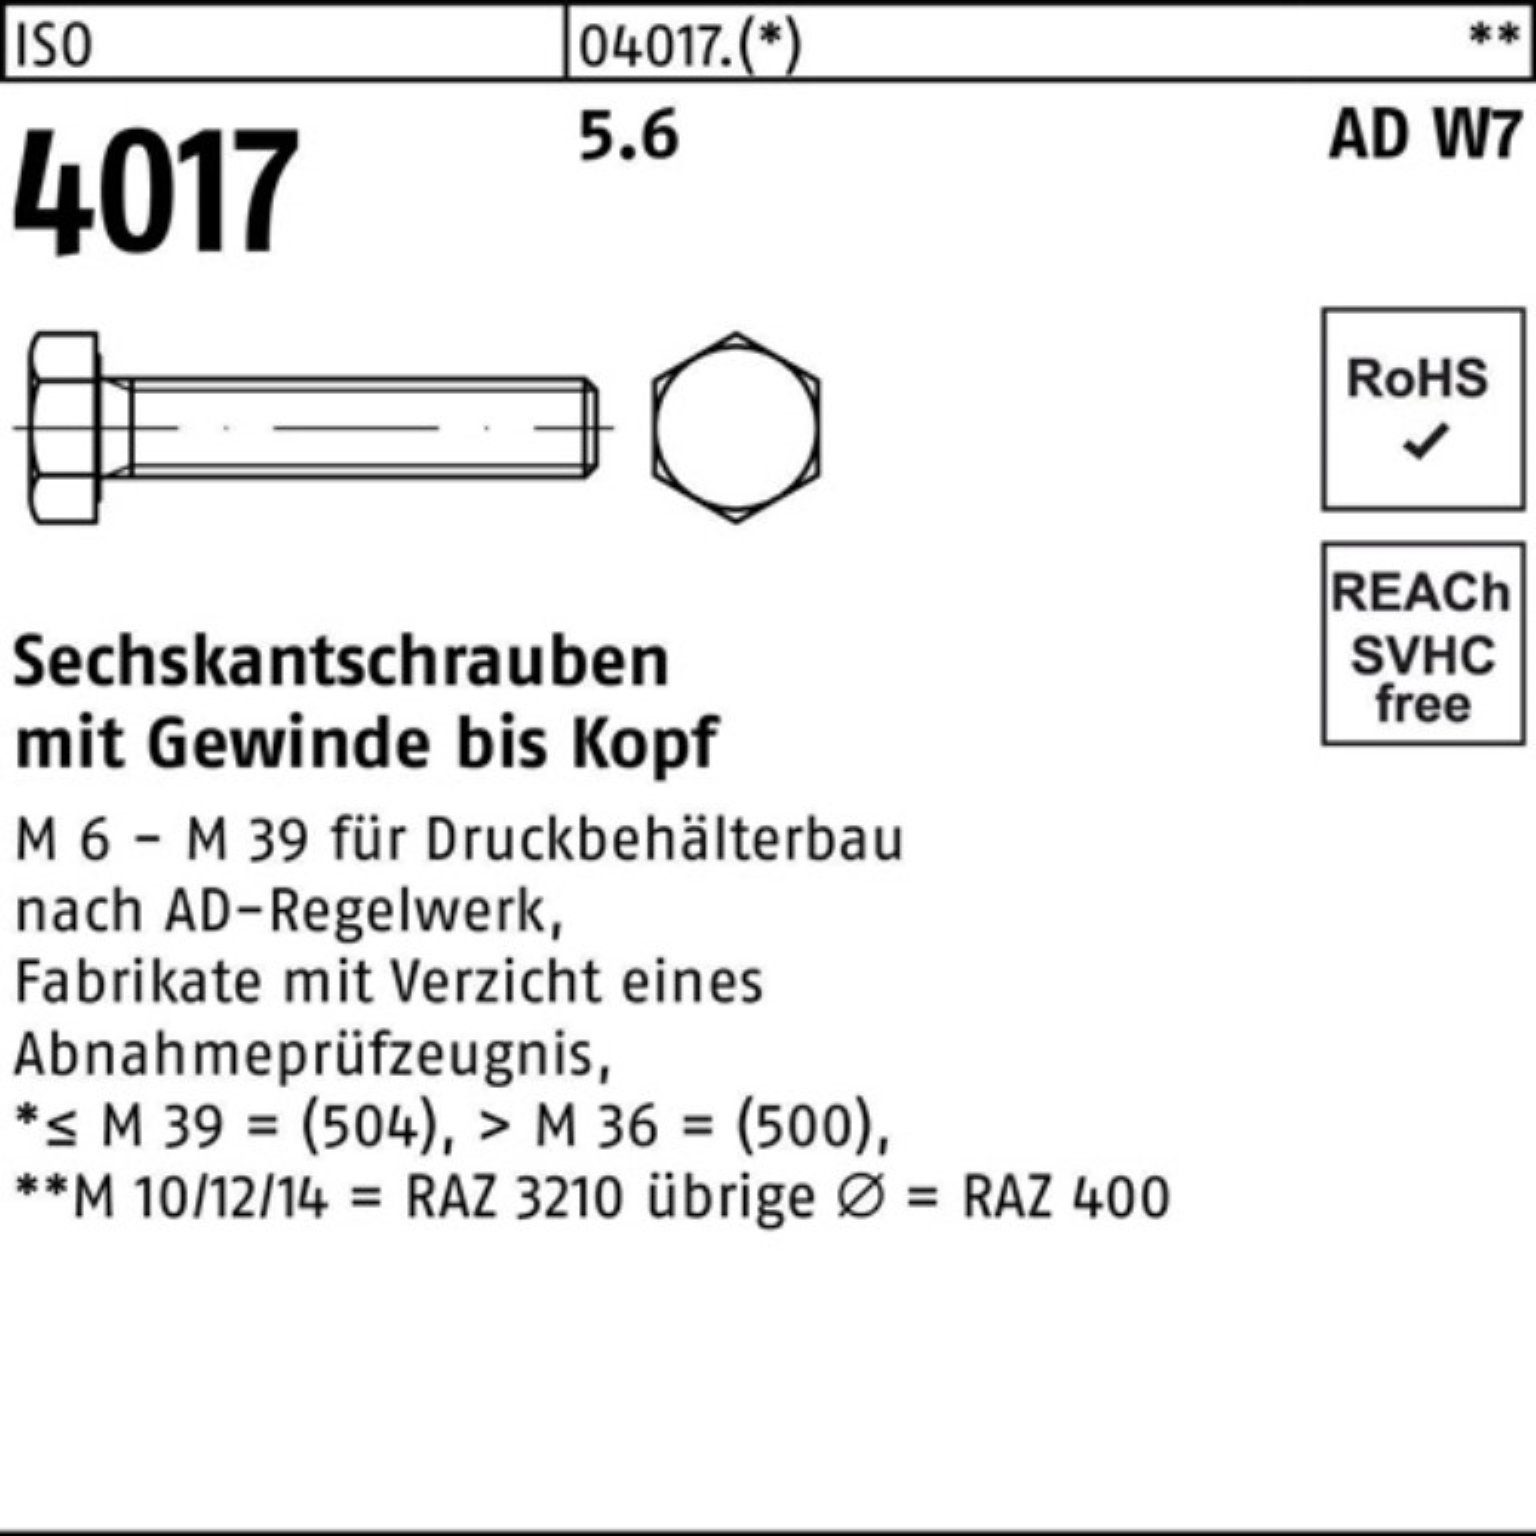 100 4017 VG Bufab Sechskantschraube W7 50 Pack ISO 100er Stück Sechskantschraube AD 5.6 M12x